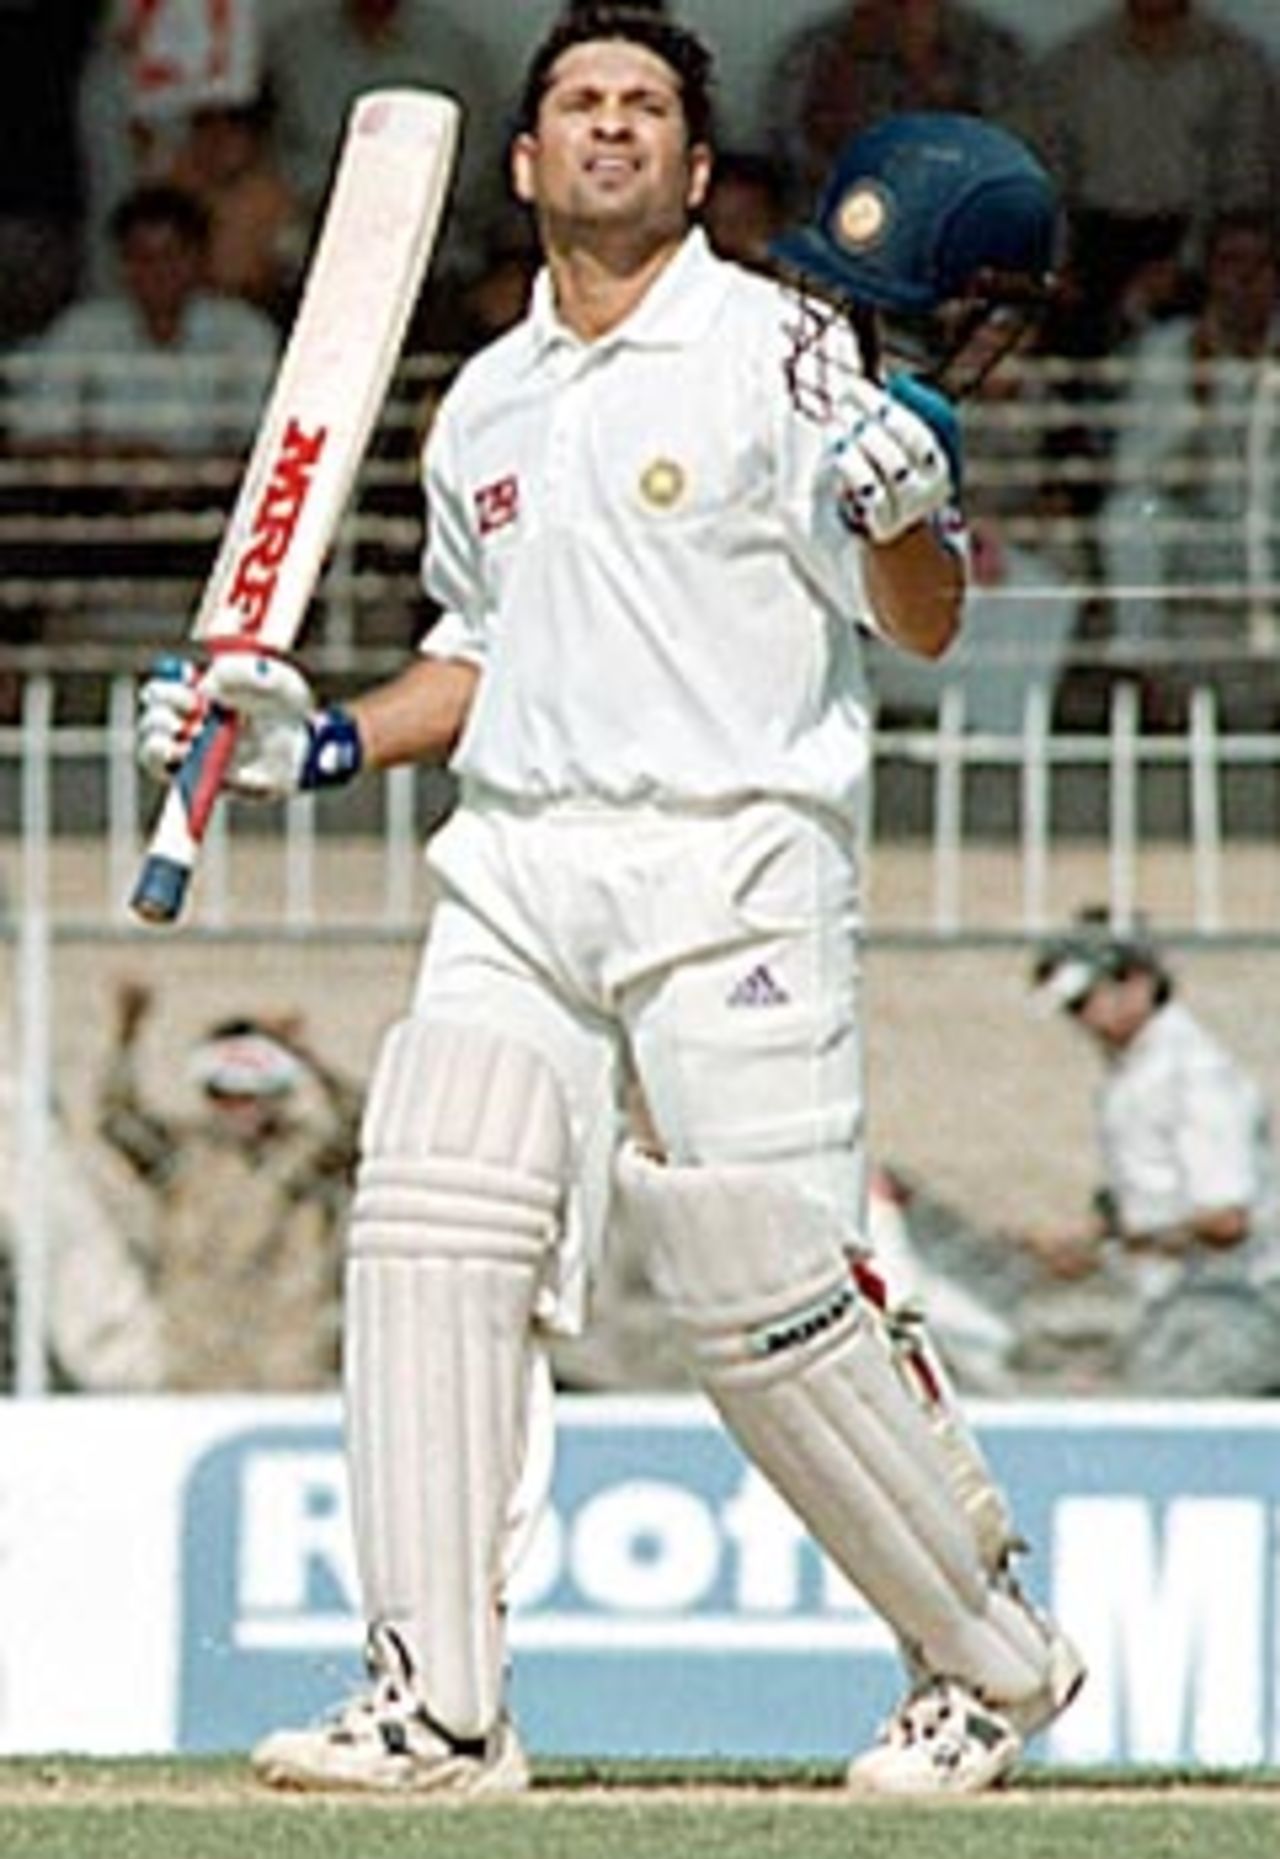 Tendulkar acknowledges the crowd after reaching his double hundred. Zimbabwe in India 2000/01, 2nd Test, India v Zimbabwe Vidarbha C.A. Ground, Nagpur, 25-29 November 2000 (Day 2)